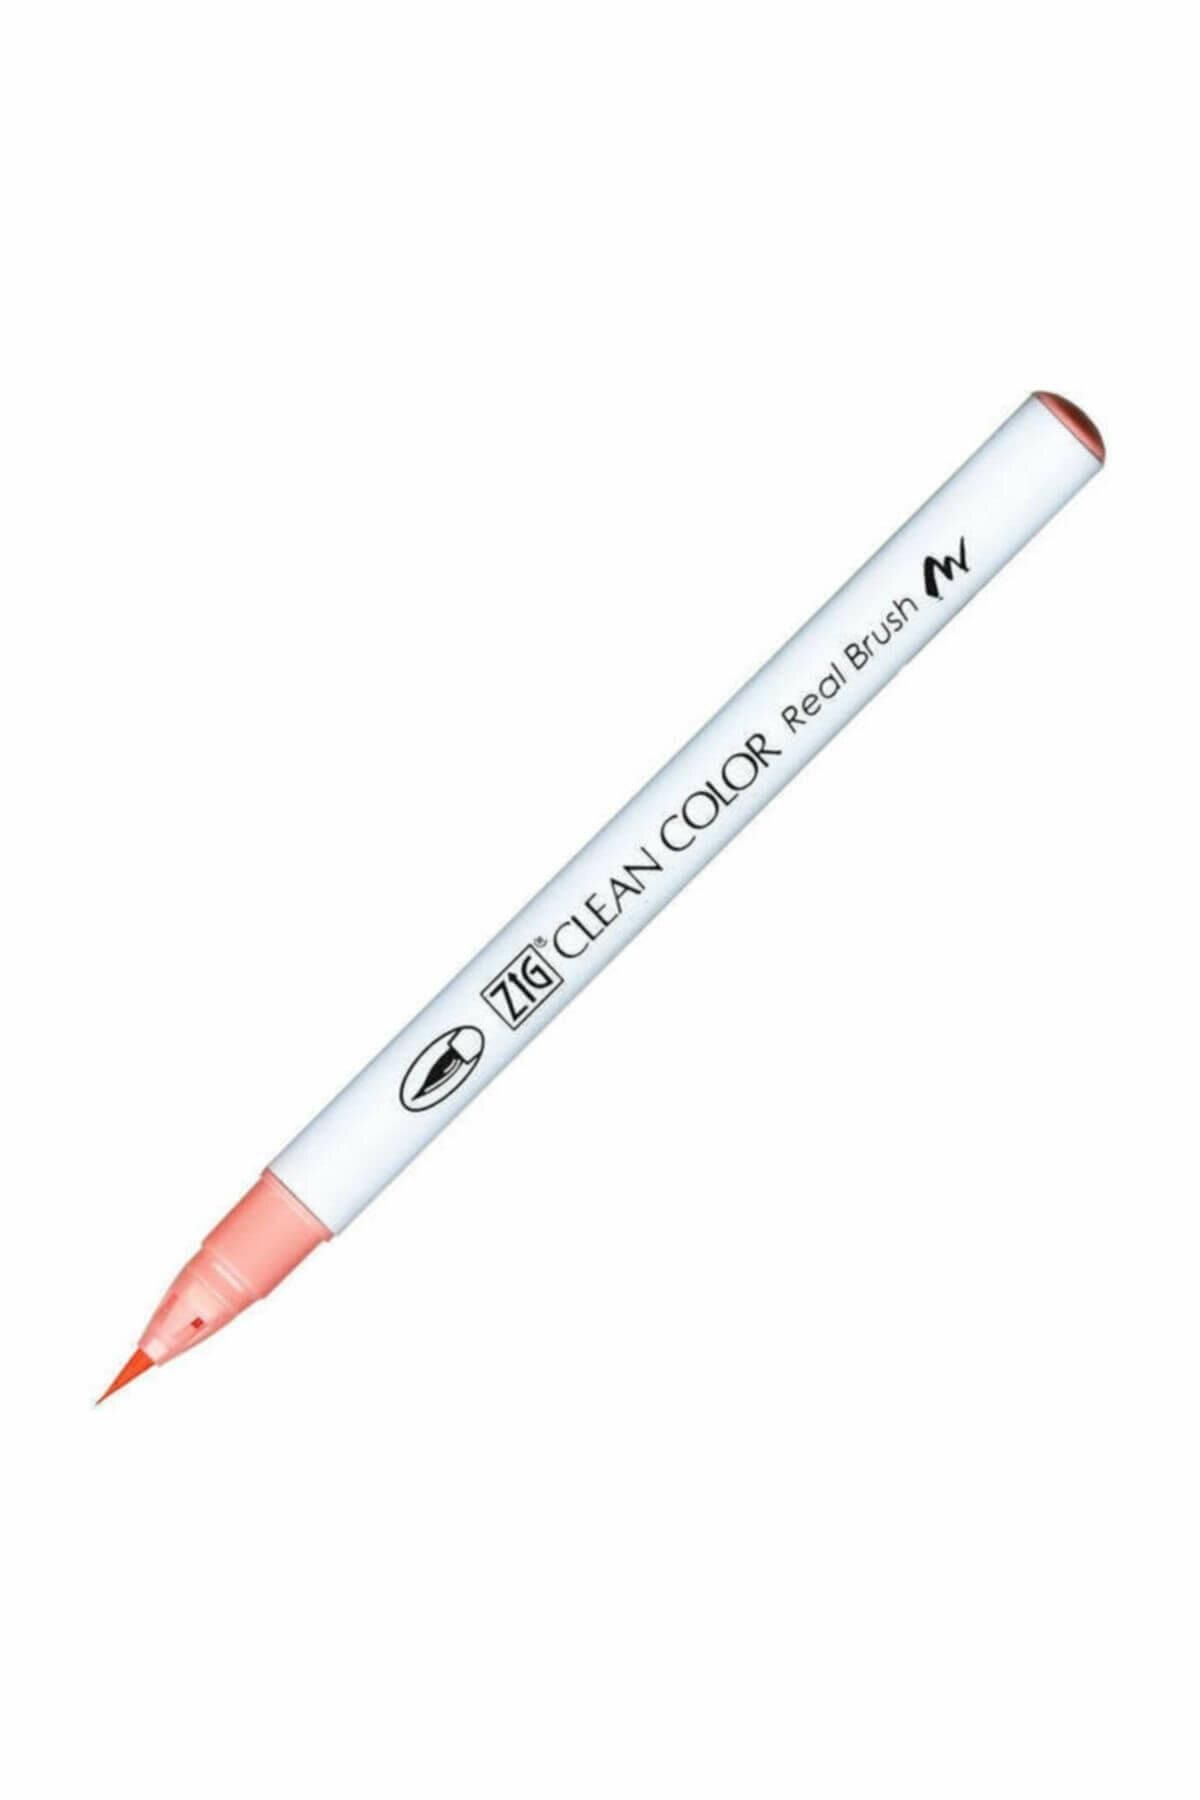 Zig Clean Color Real Brush Fırça Uçlu Marker Kalem 222 Pink Flamingo